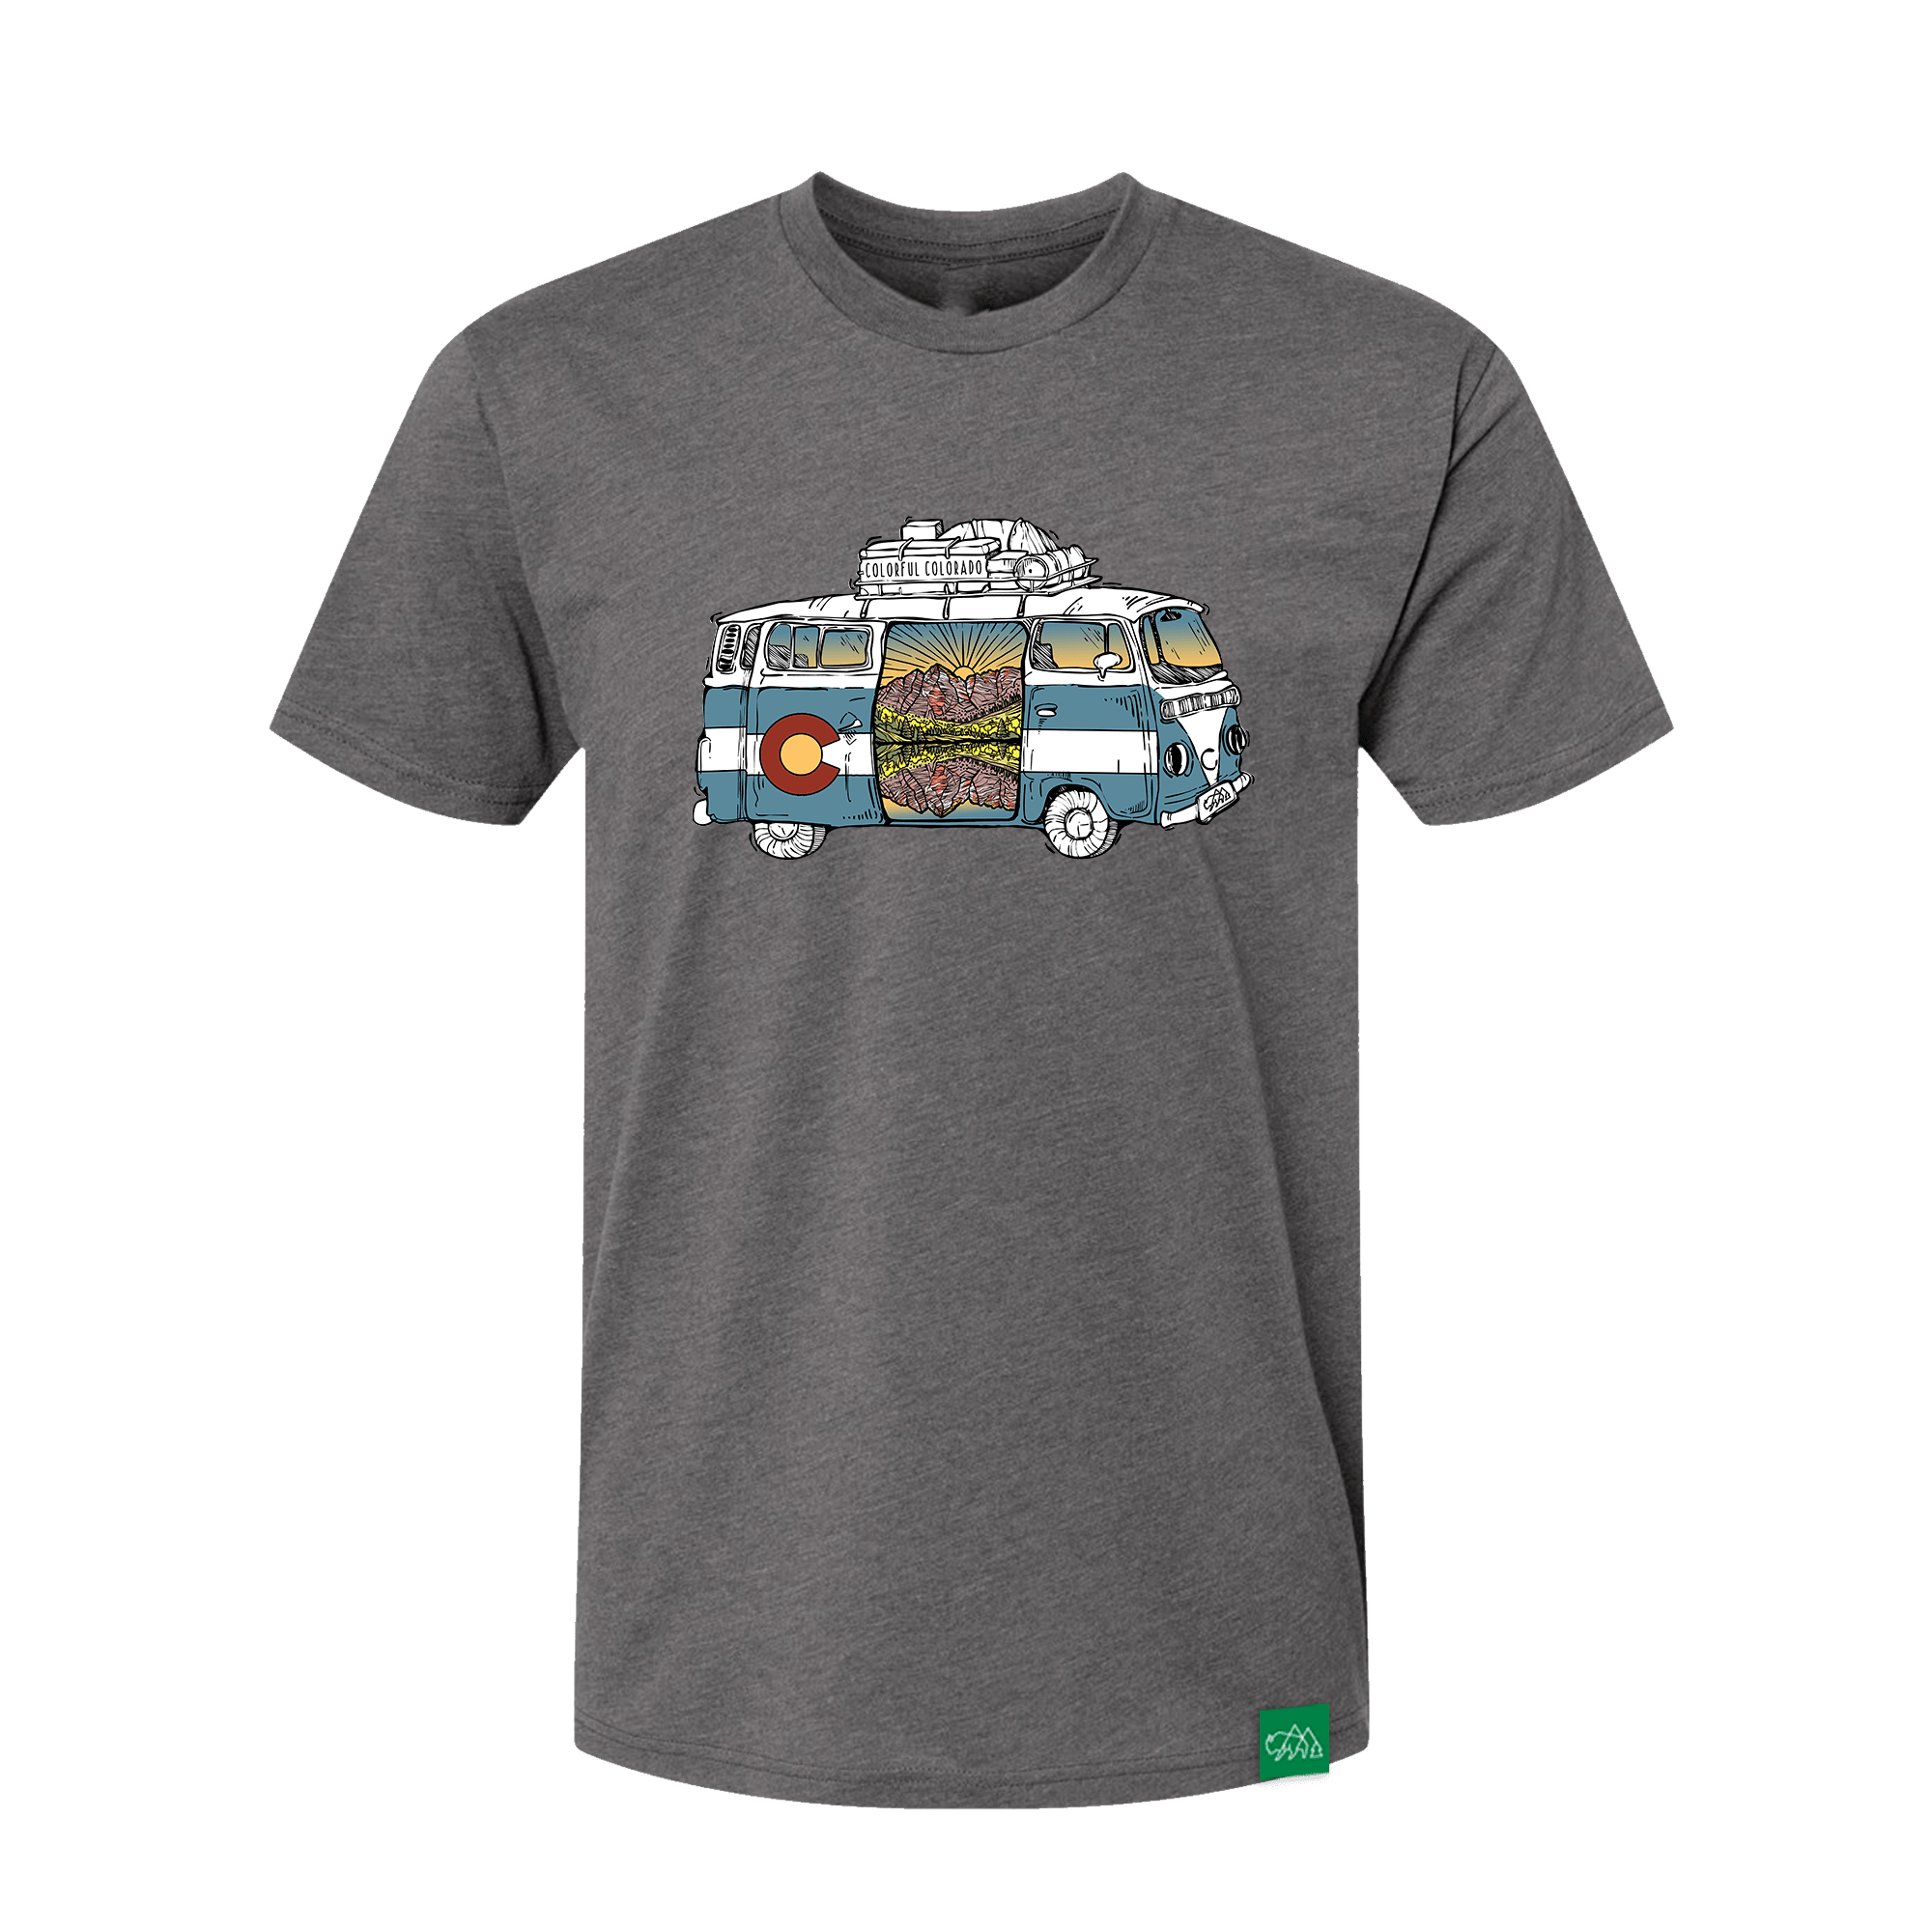 Colorado Road Trip T-Shirt